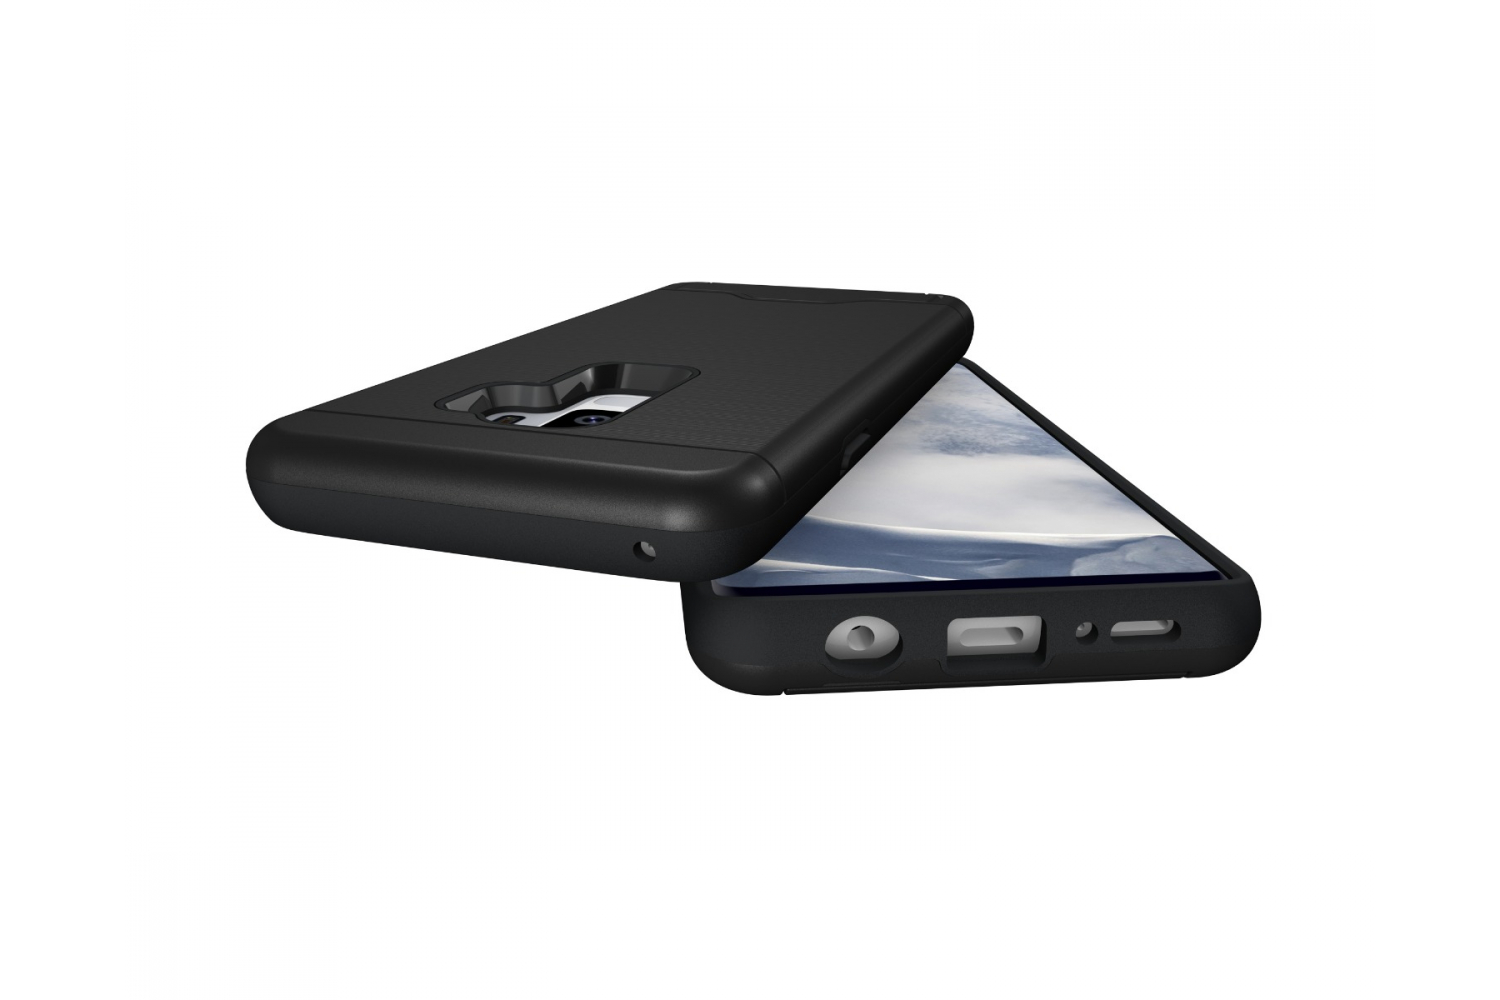 Samsung Galaxy S9 Plus Back Cover Case Zwart